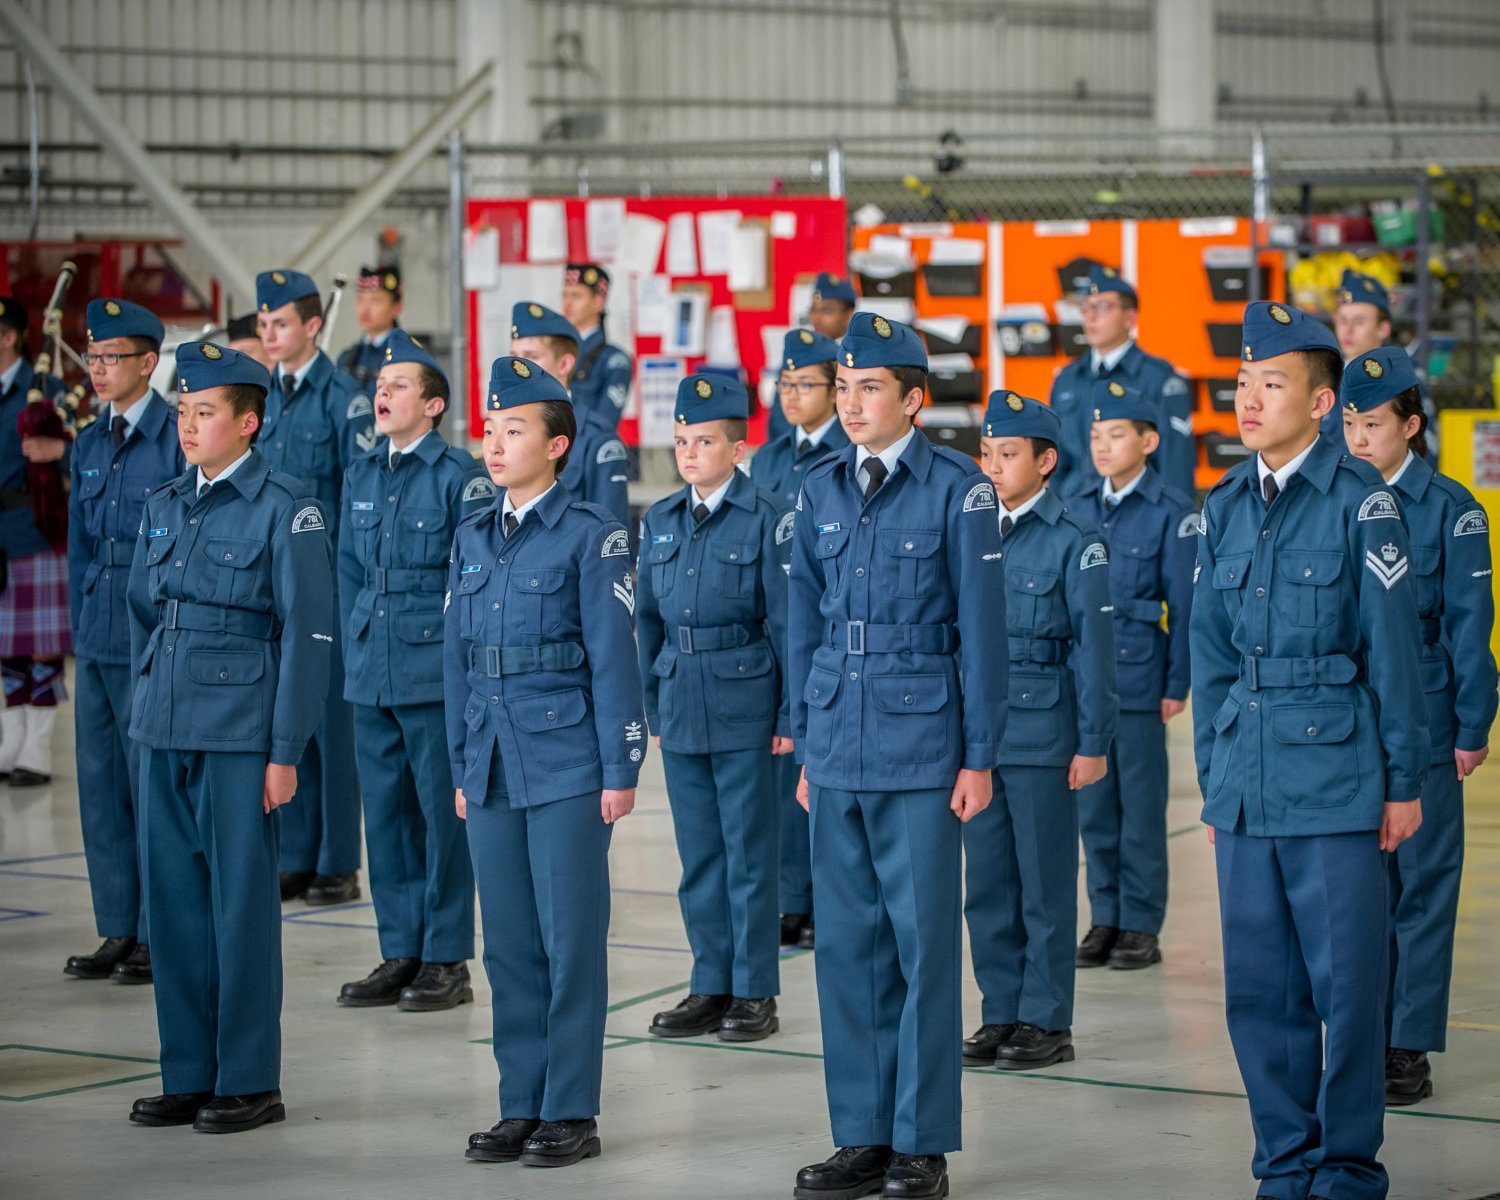 ACR Photos - 781 "Calgary" Royal Canadian Air Cadet Squadron